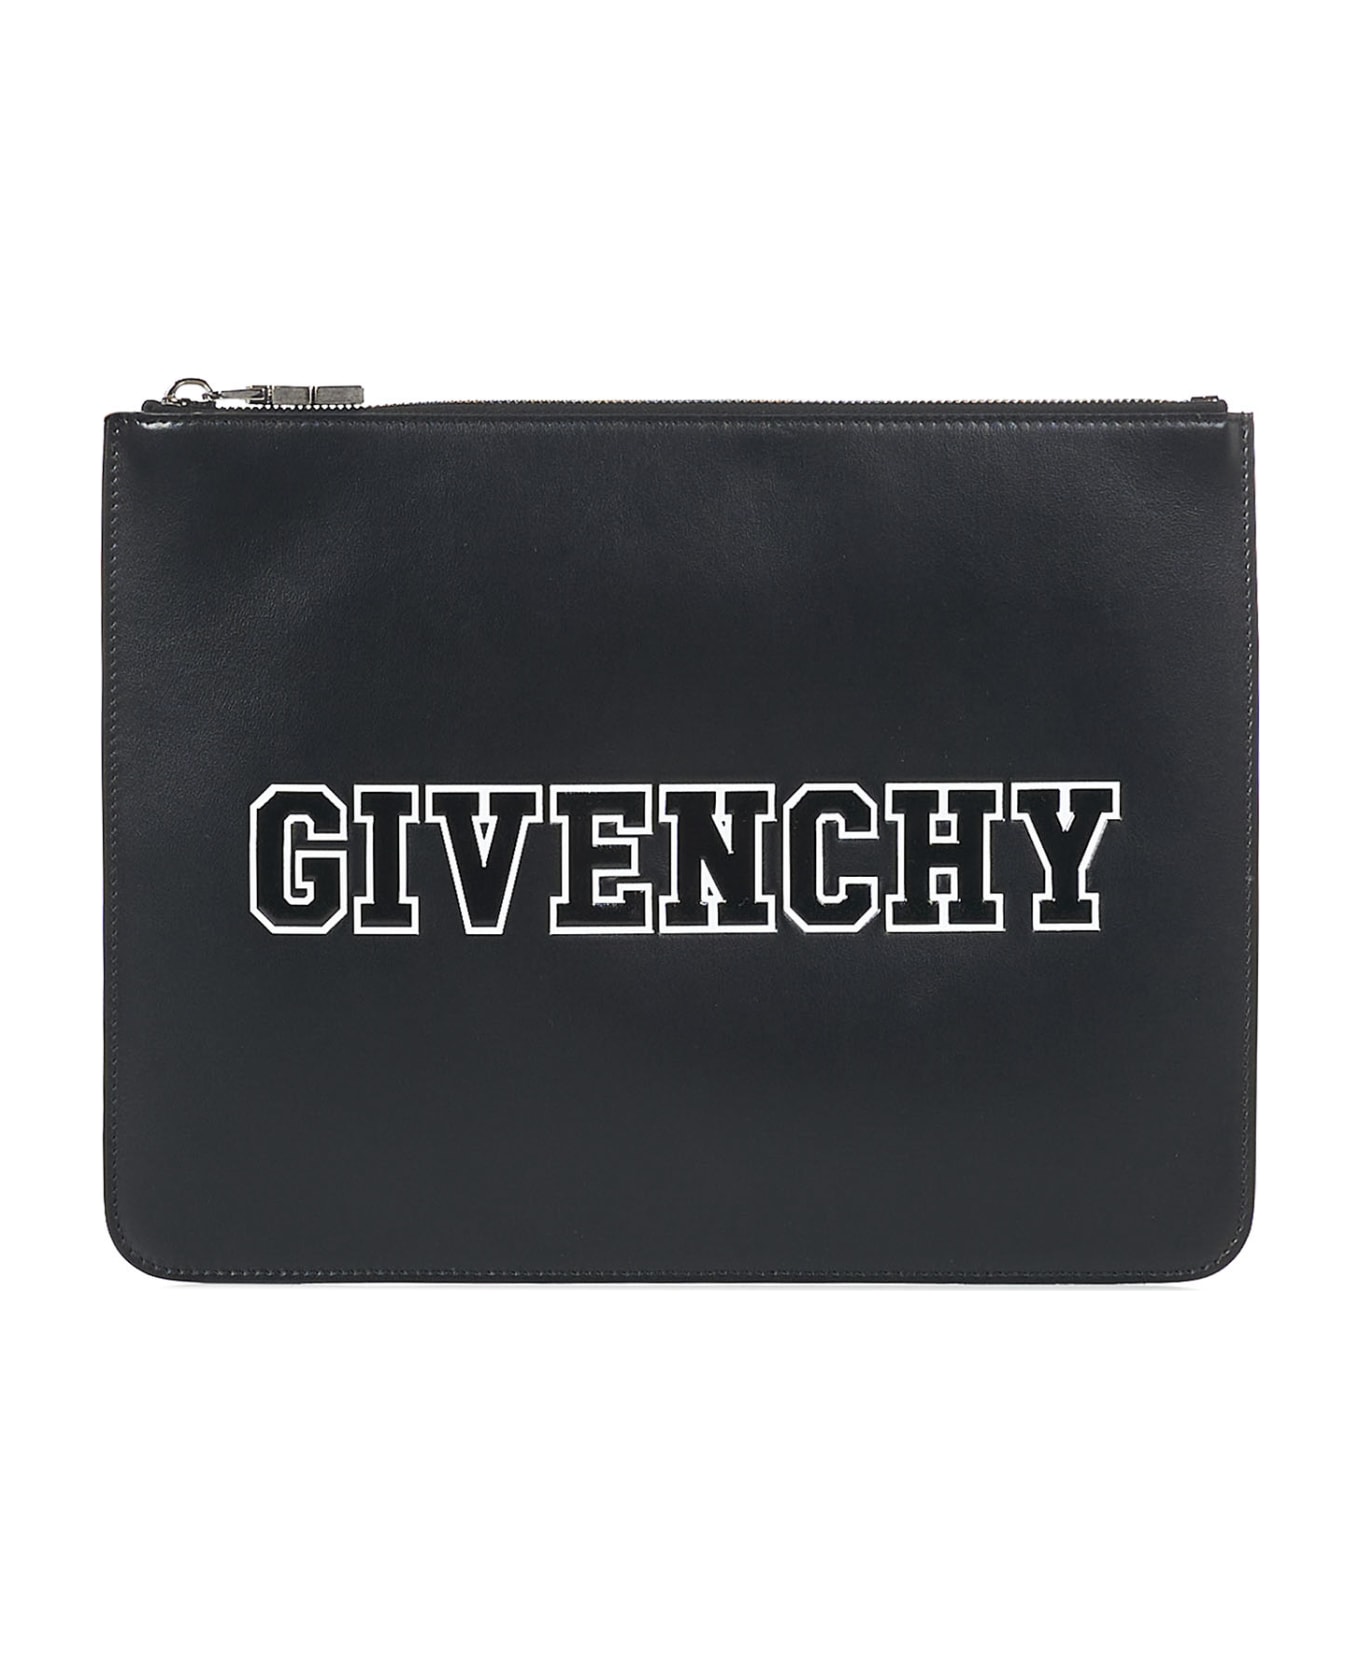 Givenchy Clutch - BLACK